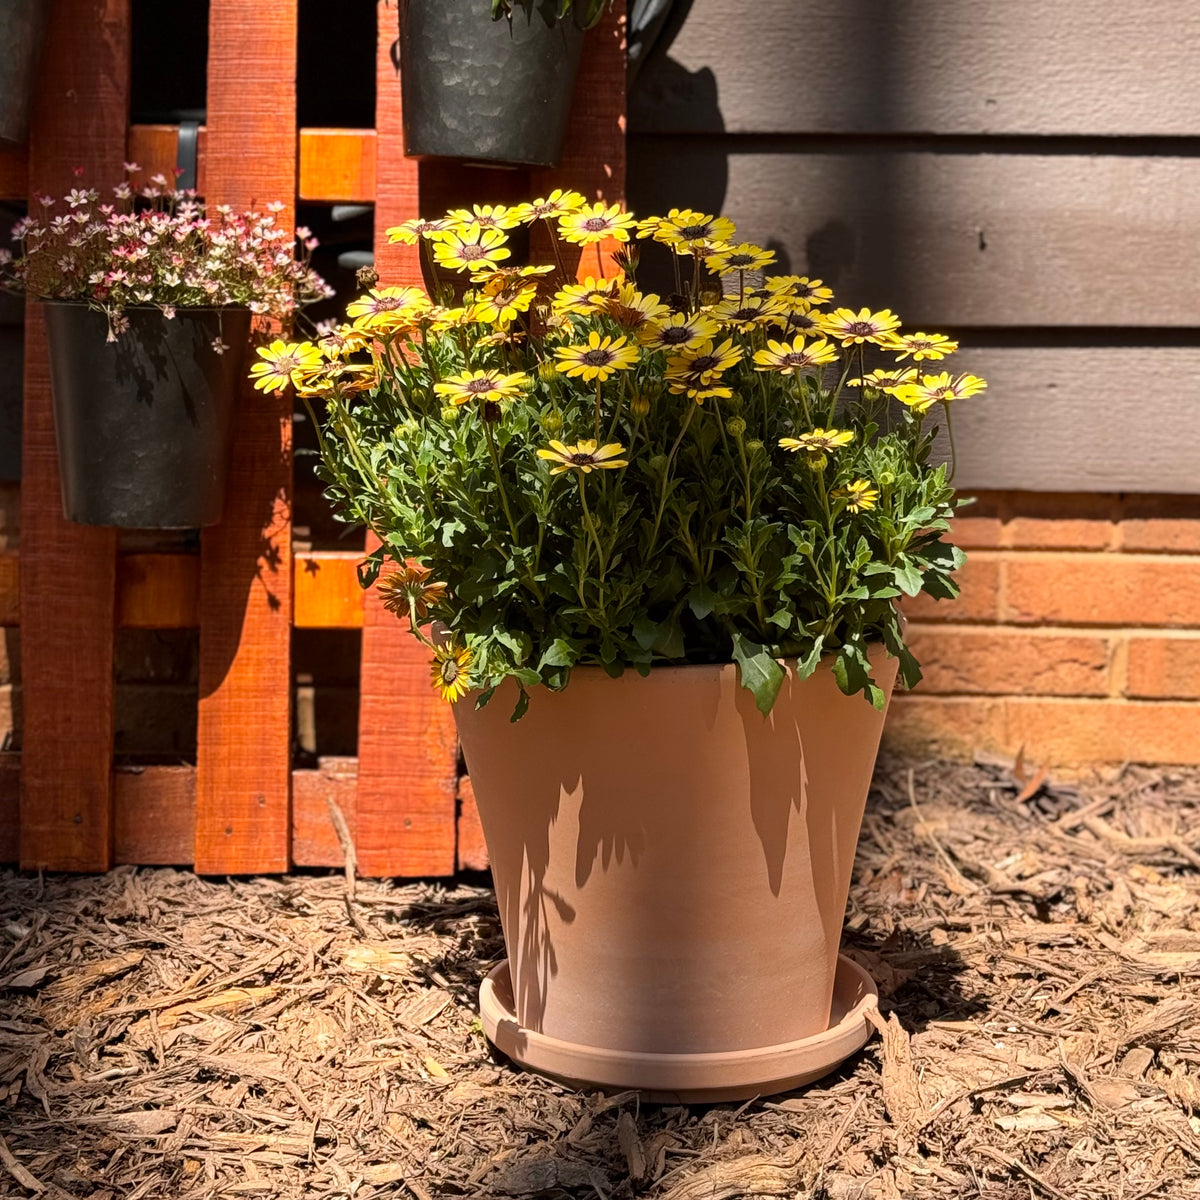 Everly Terracotta Pot With Saucer - Medium - Holistic Habitat 